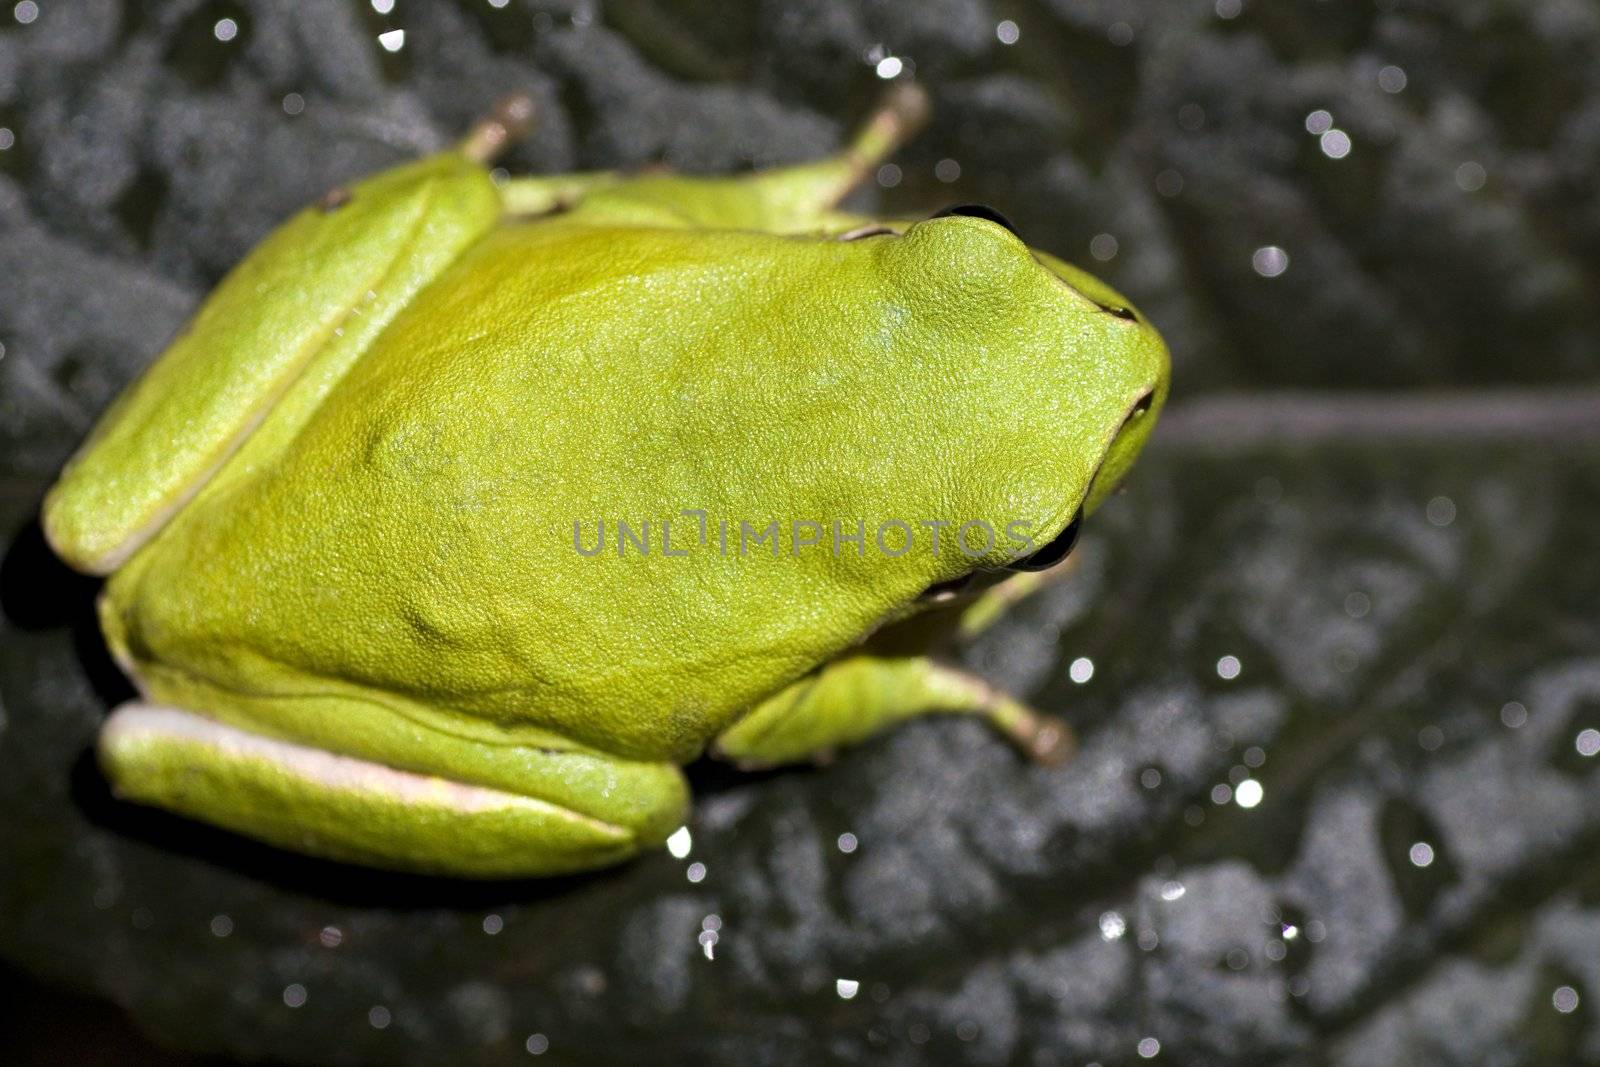 European tree frog by membio